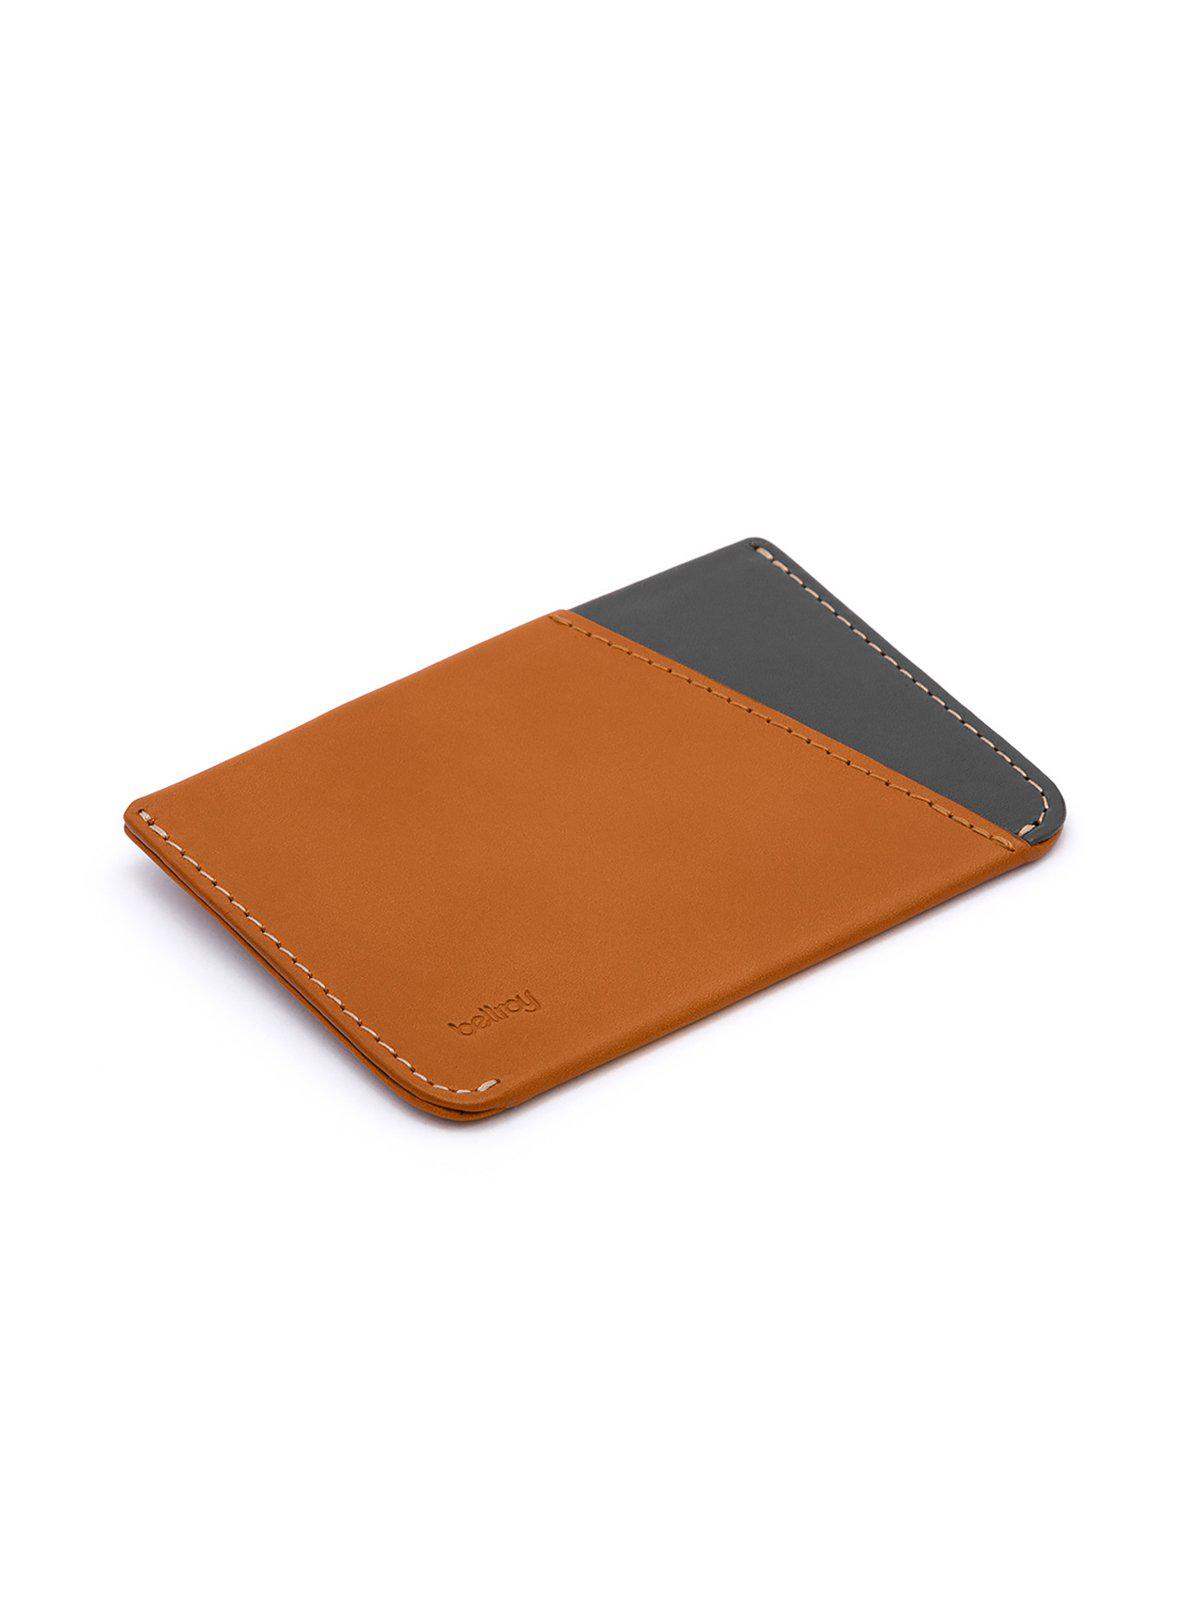 Bellroy Micro Sleeve Wallet Caramel